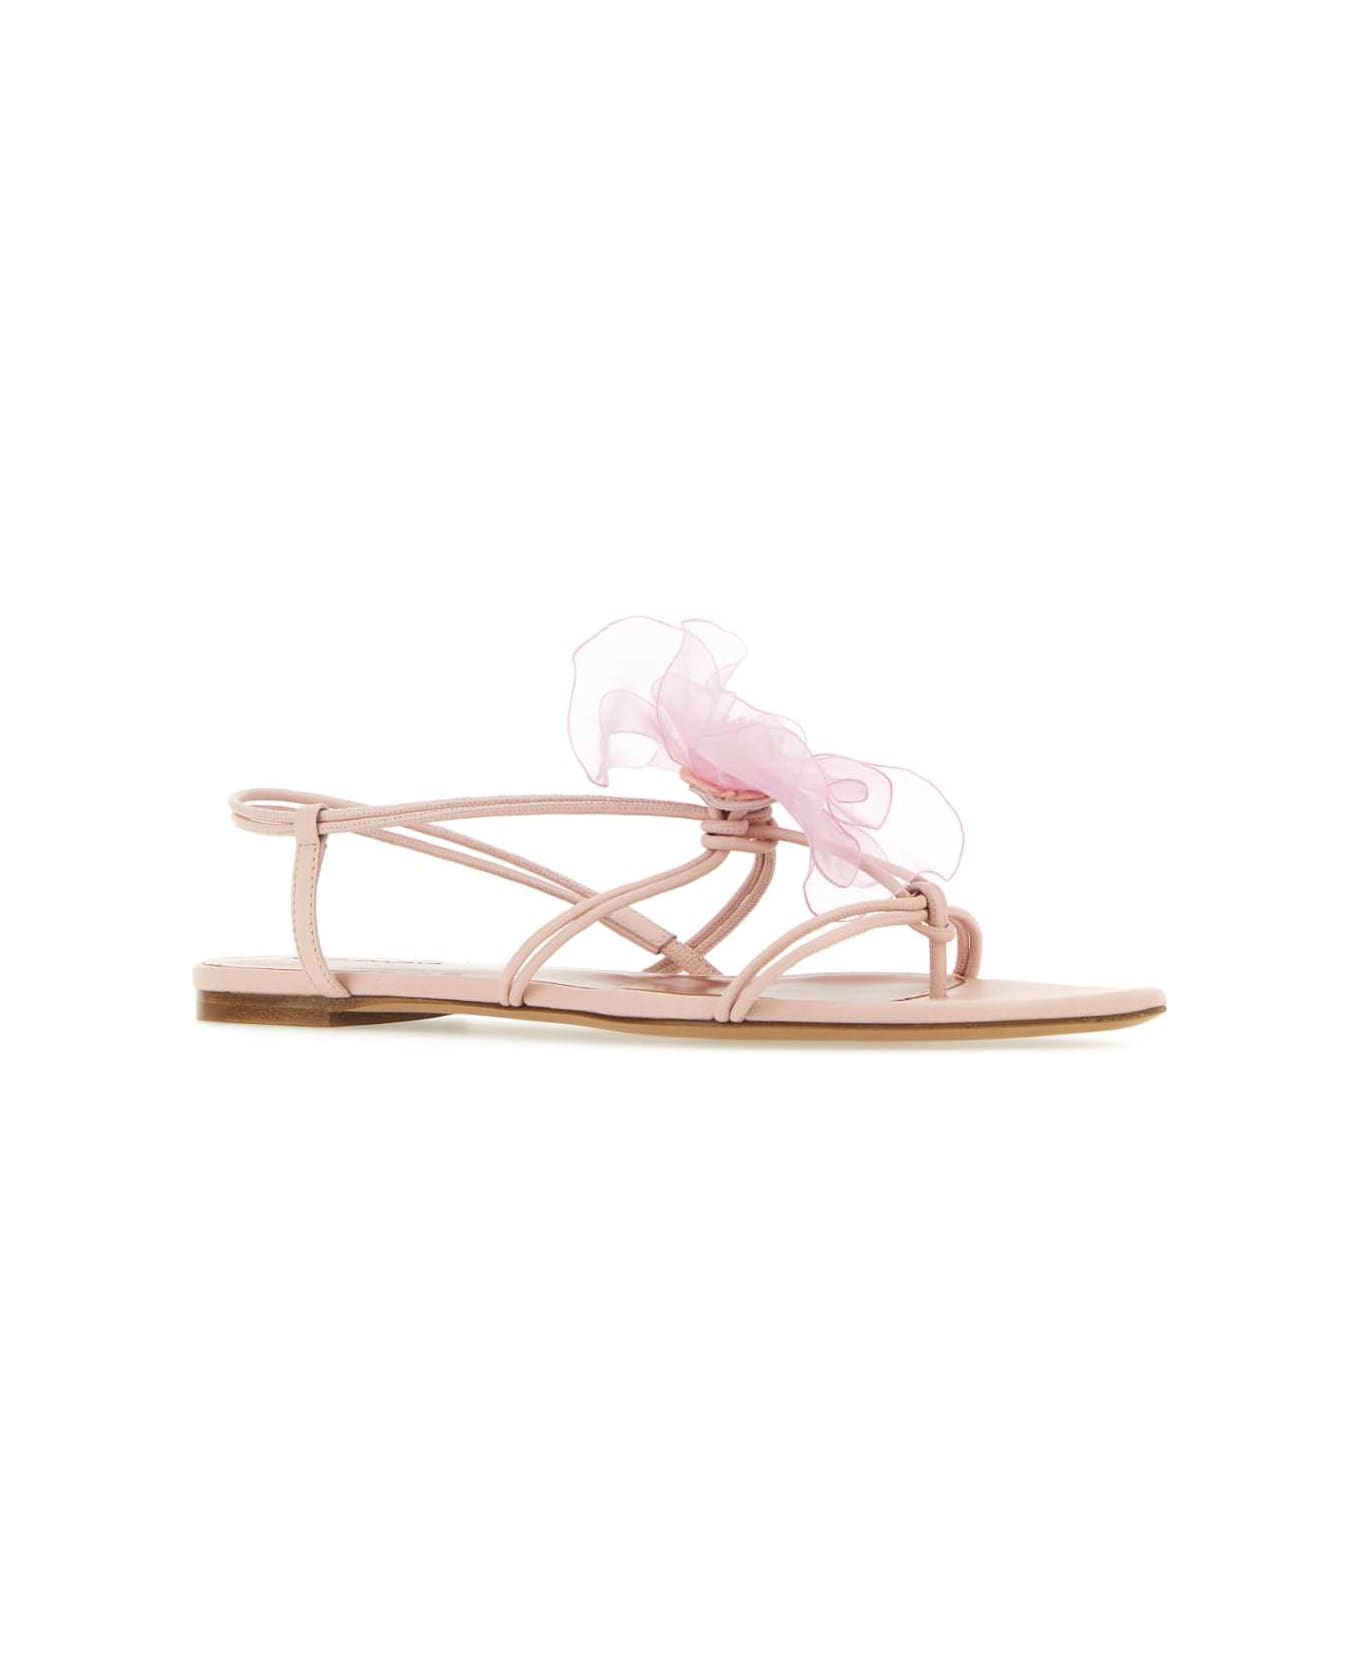 Nensi Dojaka Pastel Pink Nappa Leather Thong Sandals - Pink サンダル